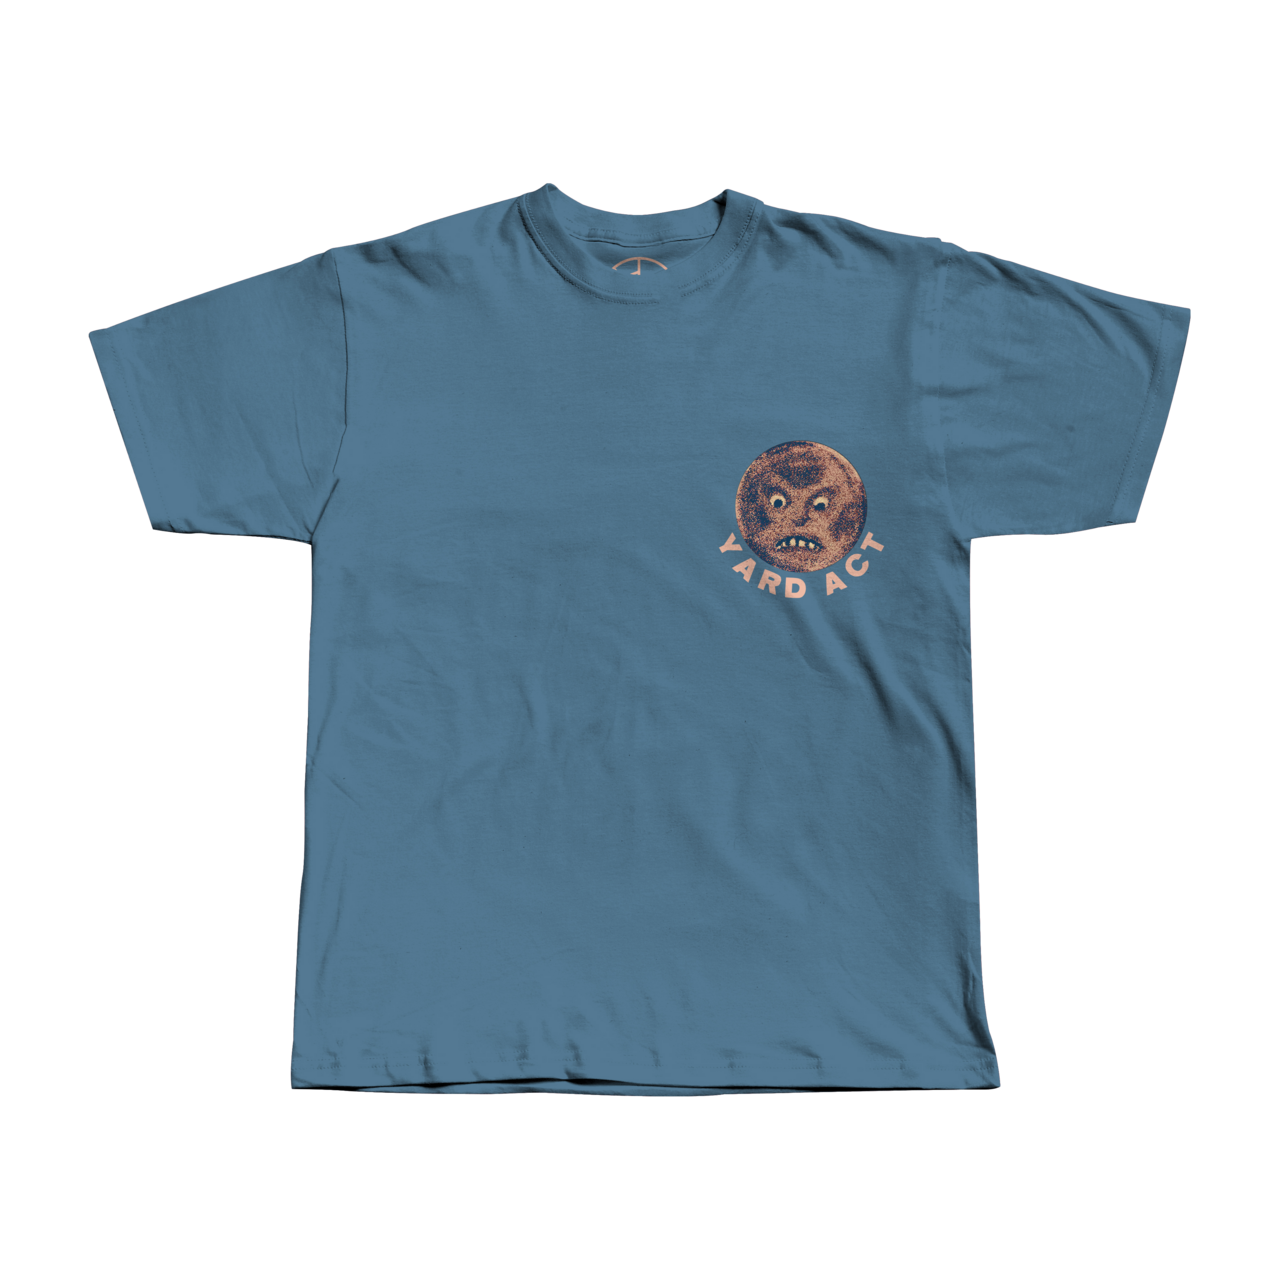 Yard Act - Inverted Burning Man T-Shirt Blue / Coral